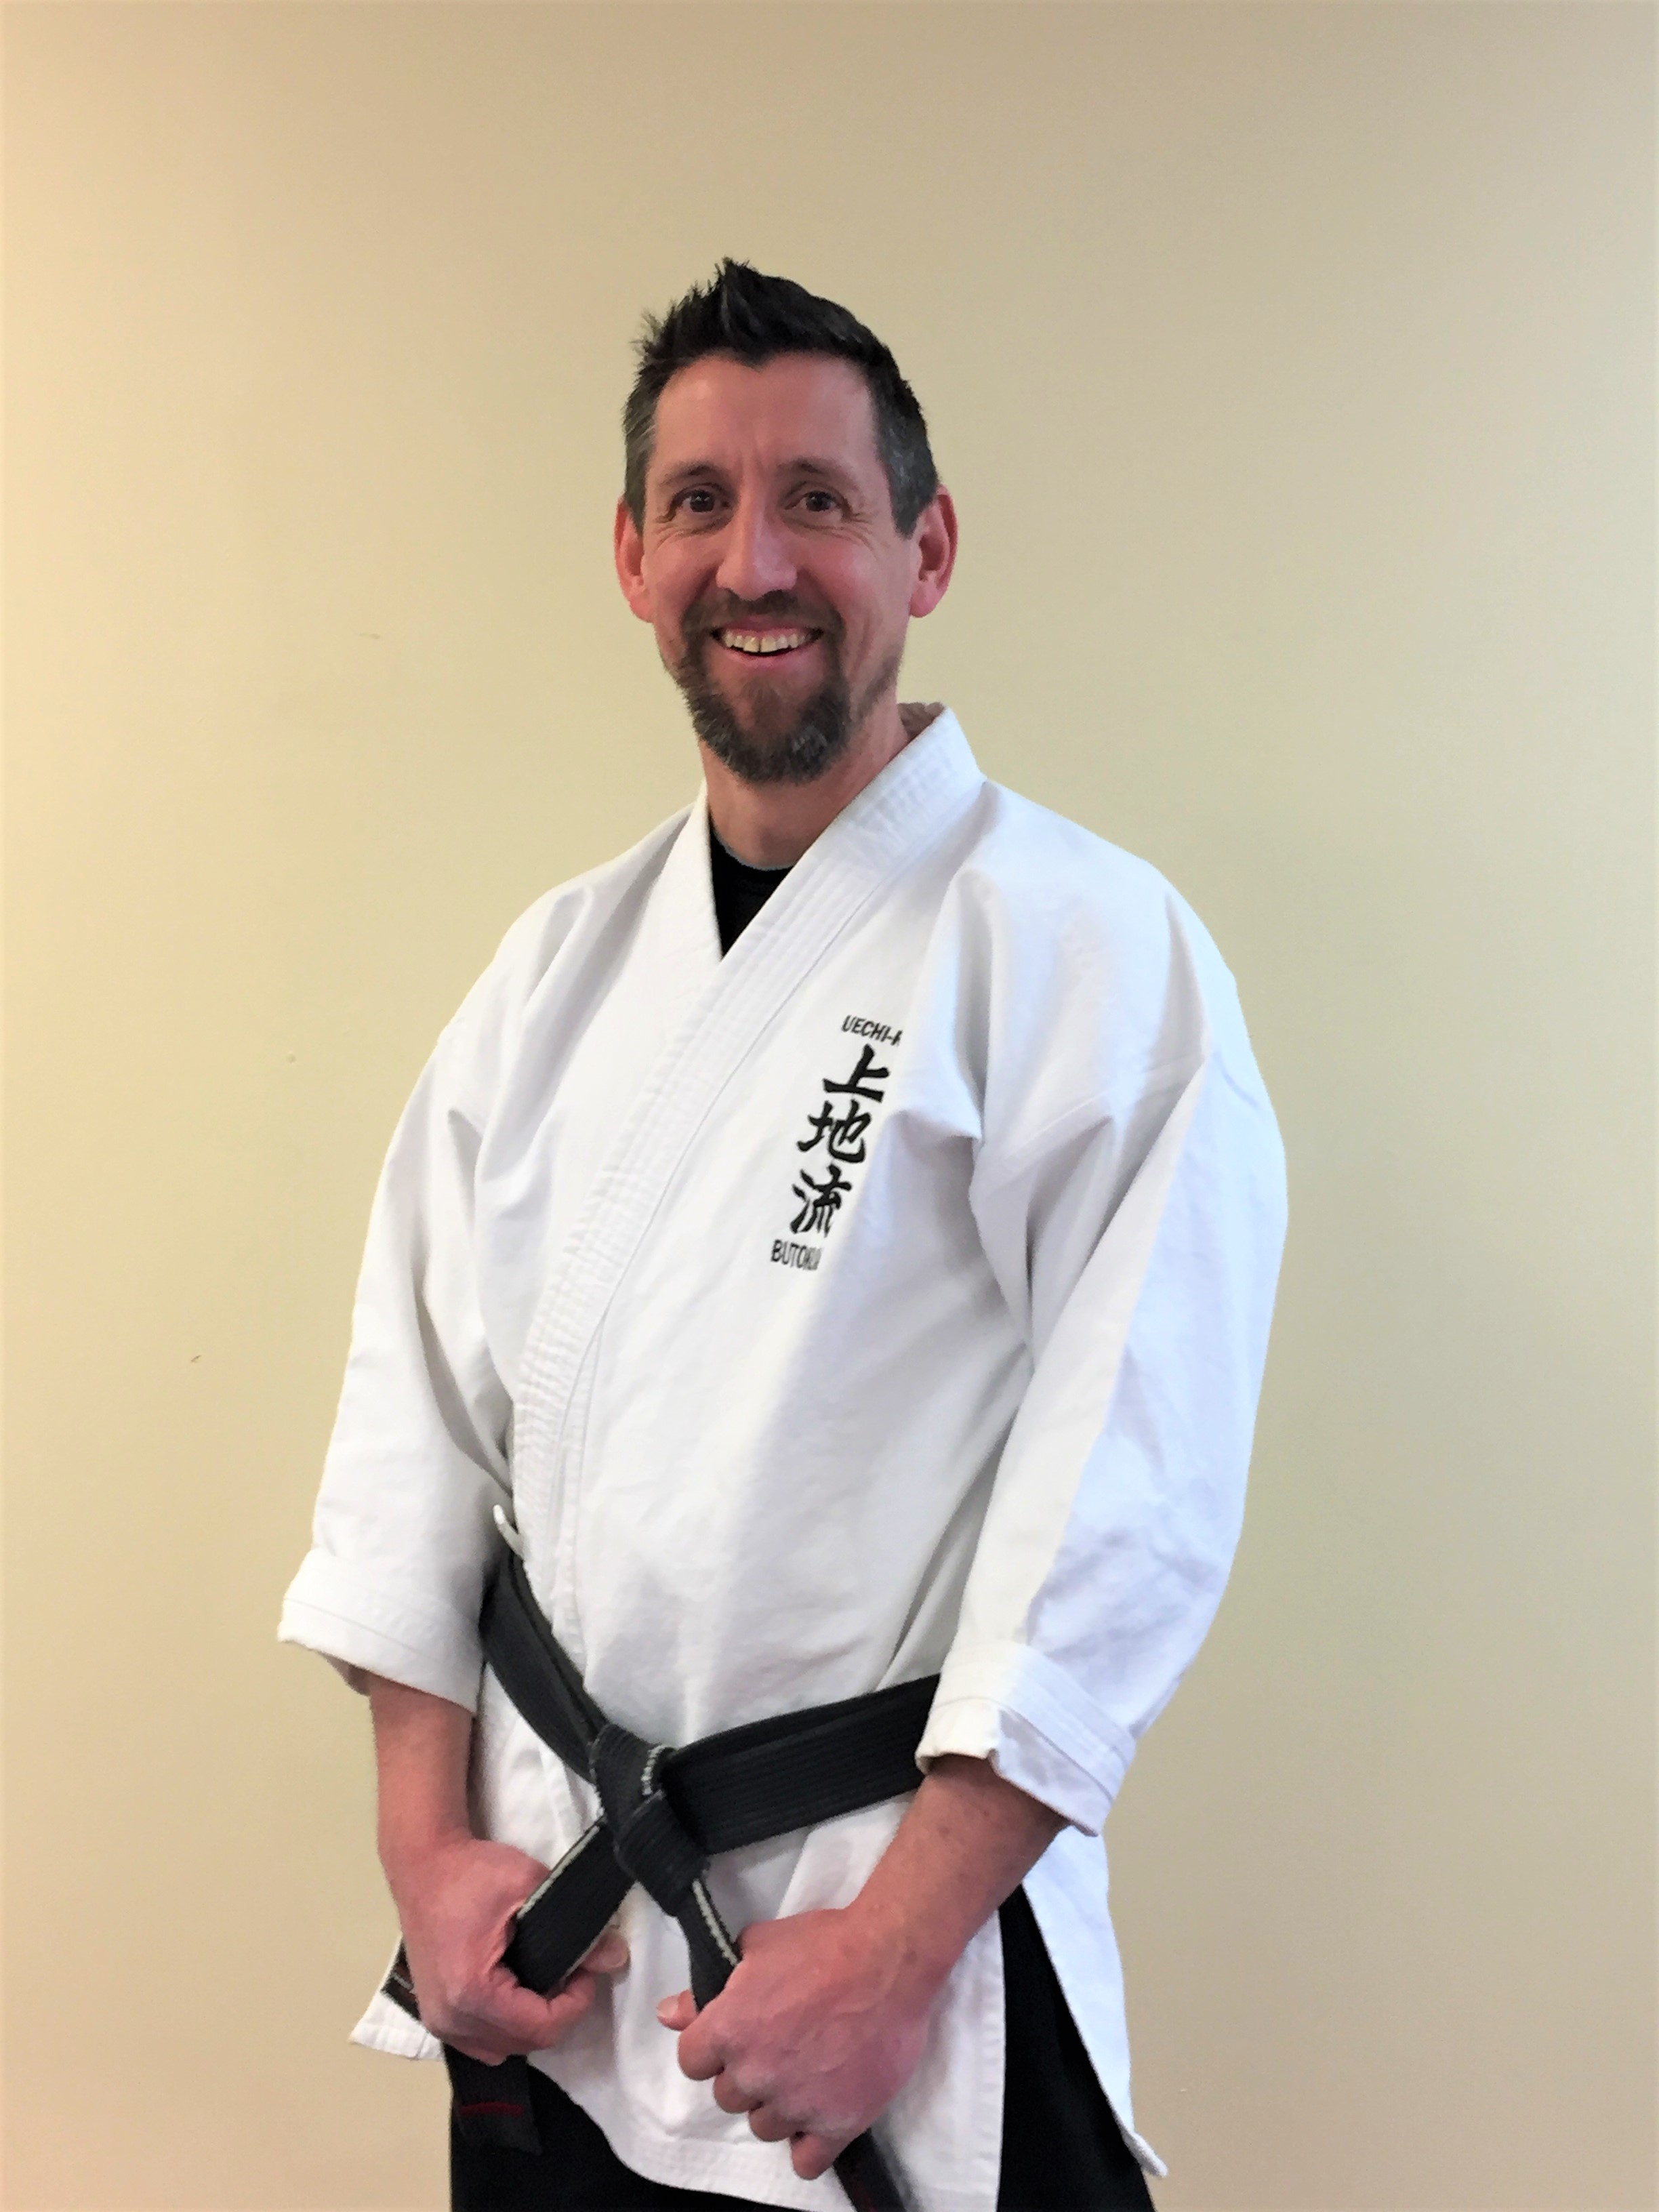 Sensei Karate: Gelar dan Kewibawaan – Appcash.info